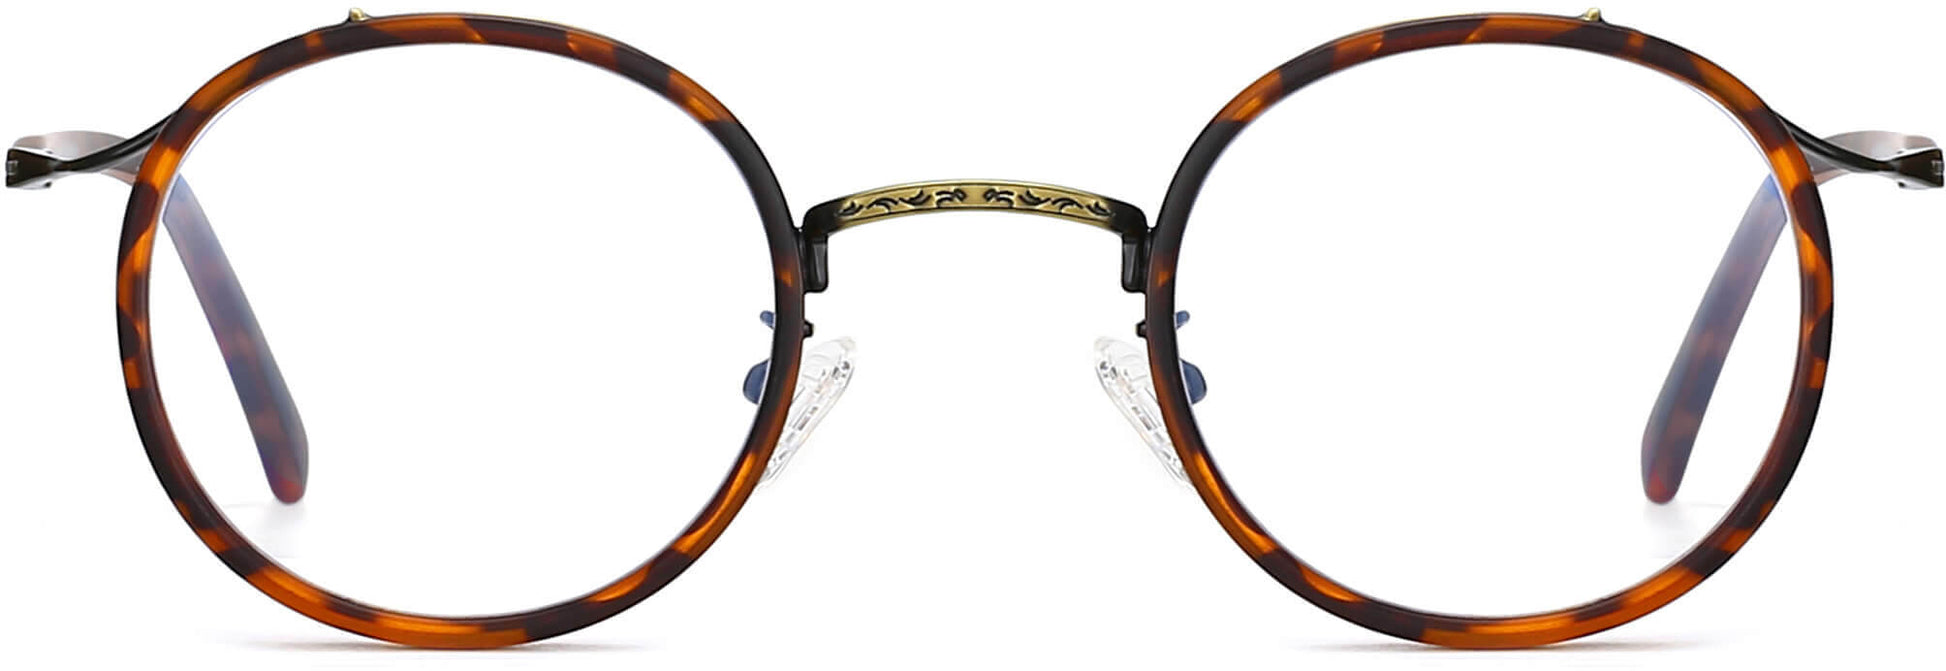 Lottie Round Tortoise Eyeglasses from ANRRI, front view